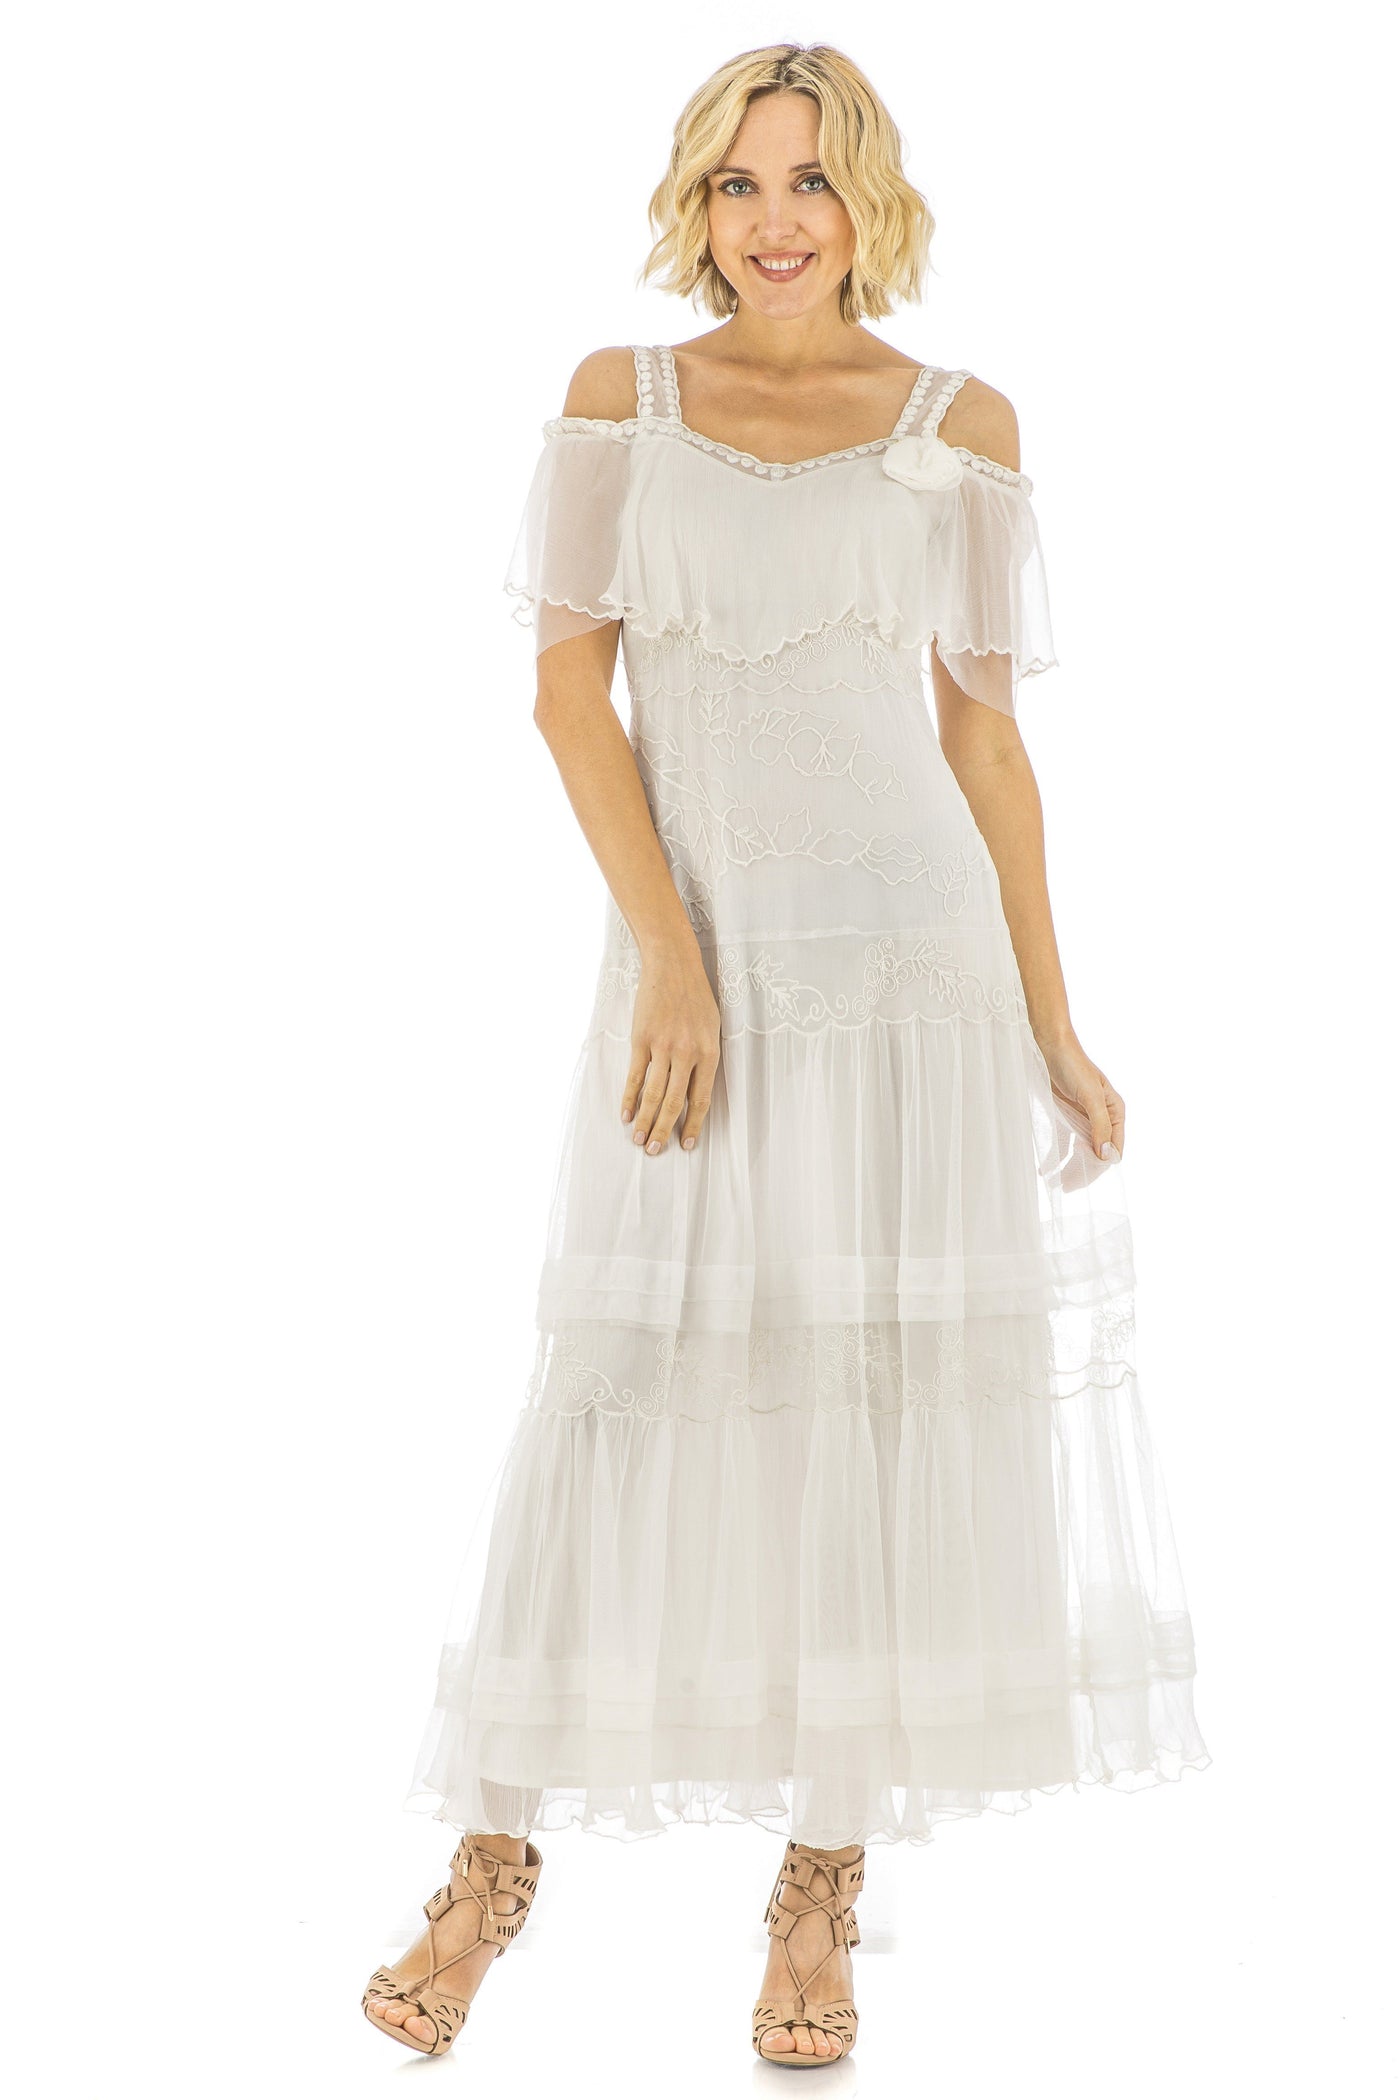 Delillah Vintage Inspired Wedding Dress 40271 in Ivory by Nataya